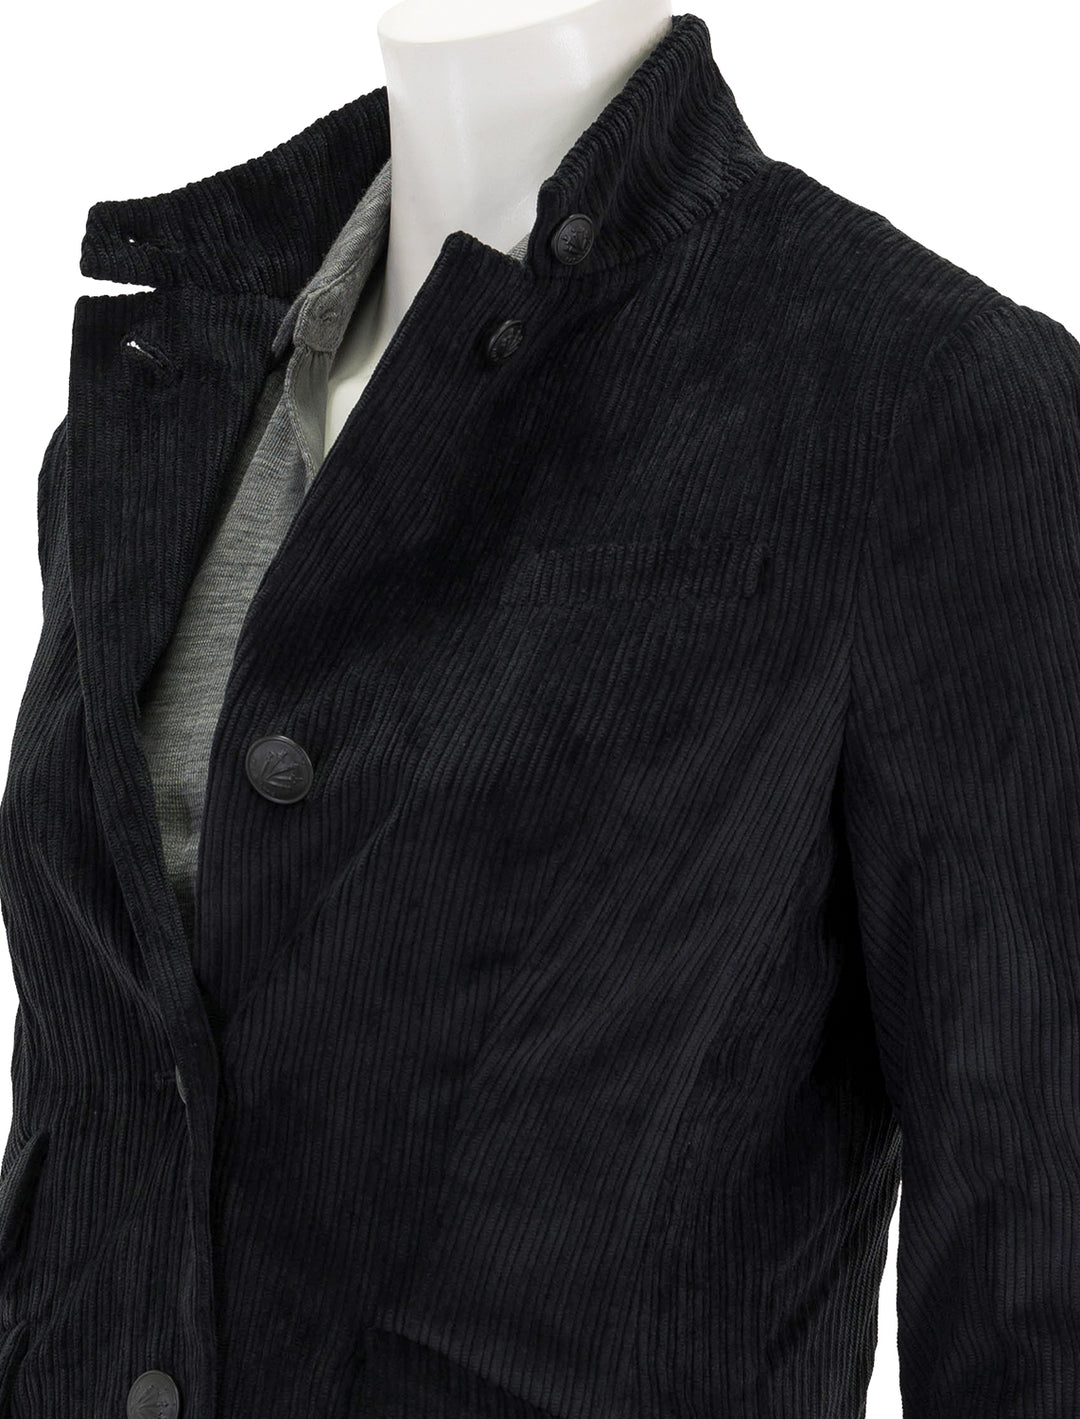 Close-up view of Rag & Bone's slade cord blazer in black.